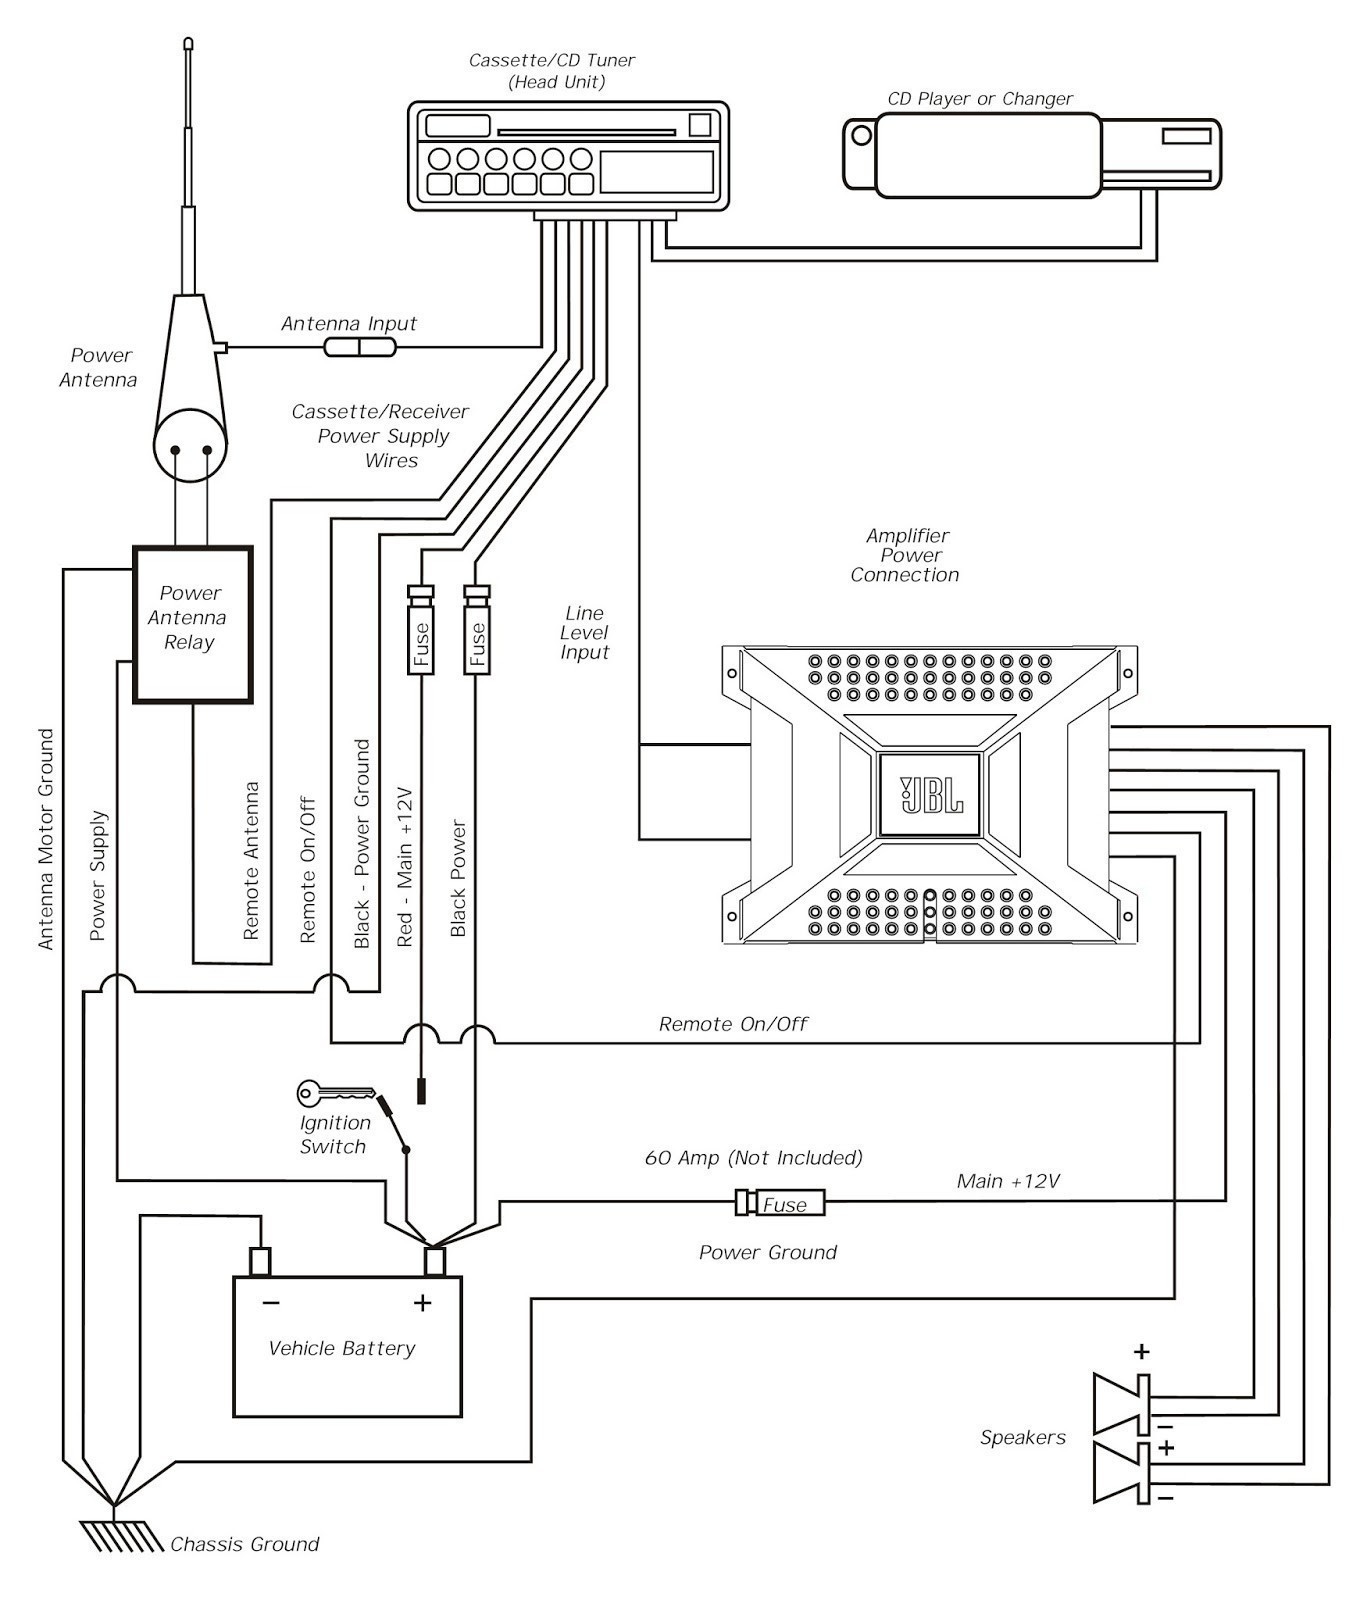 Wiring Diagram Auto Gauge 2019 Wiring Diagram For Auto Gauge Tachometer Save Auto Meter Tach Wiring